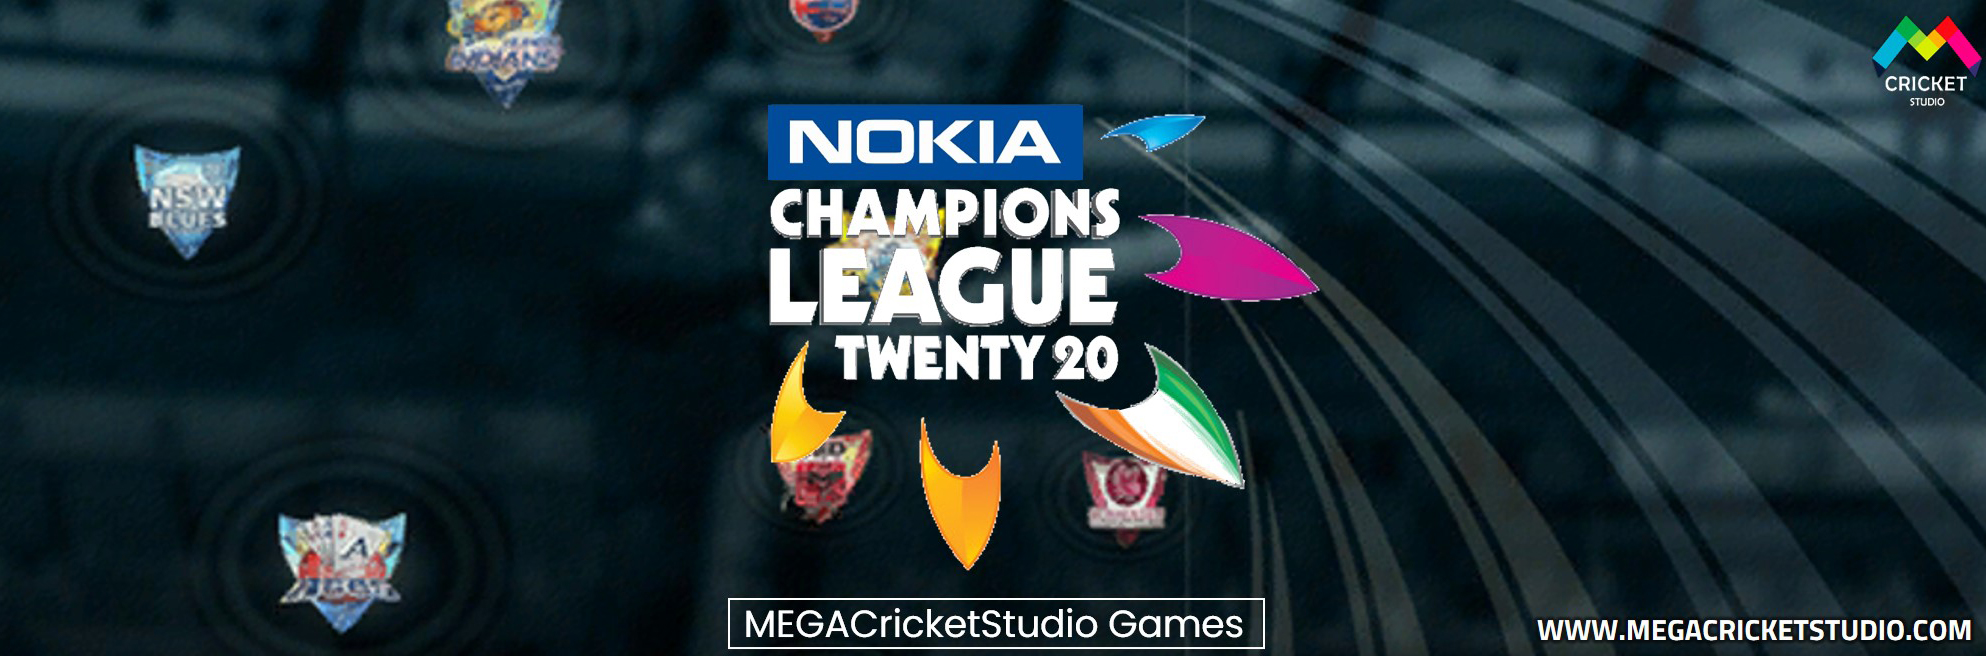 Nokia Champions League T20 2011 Patch for EA Cricket 07